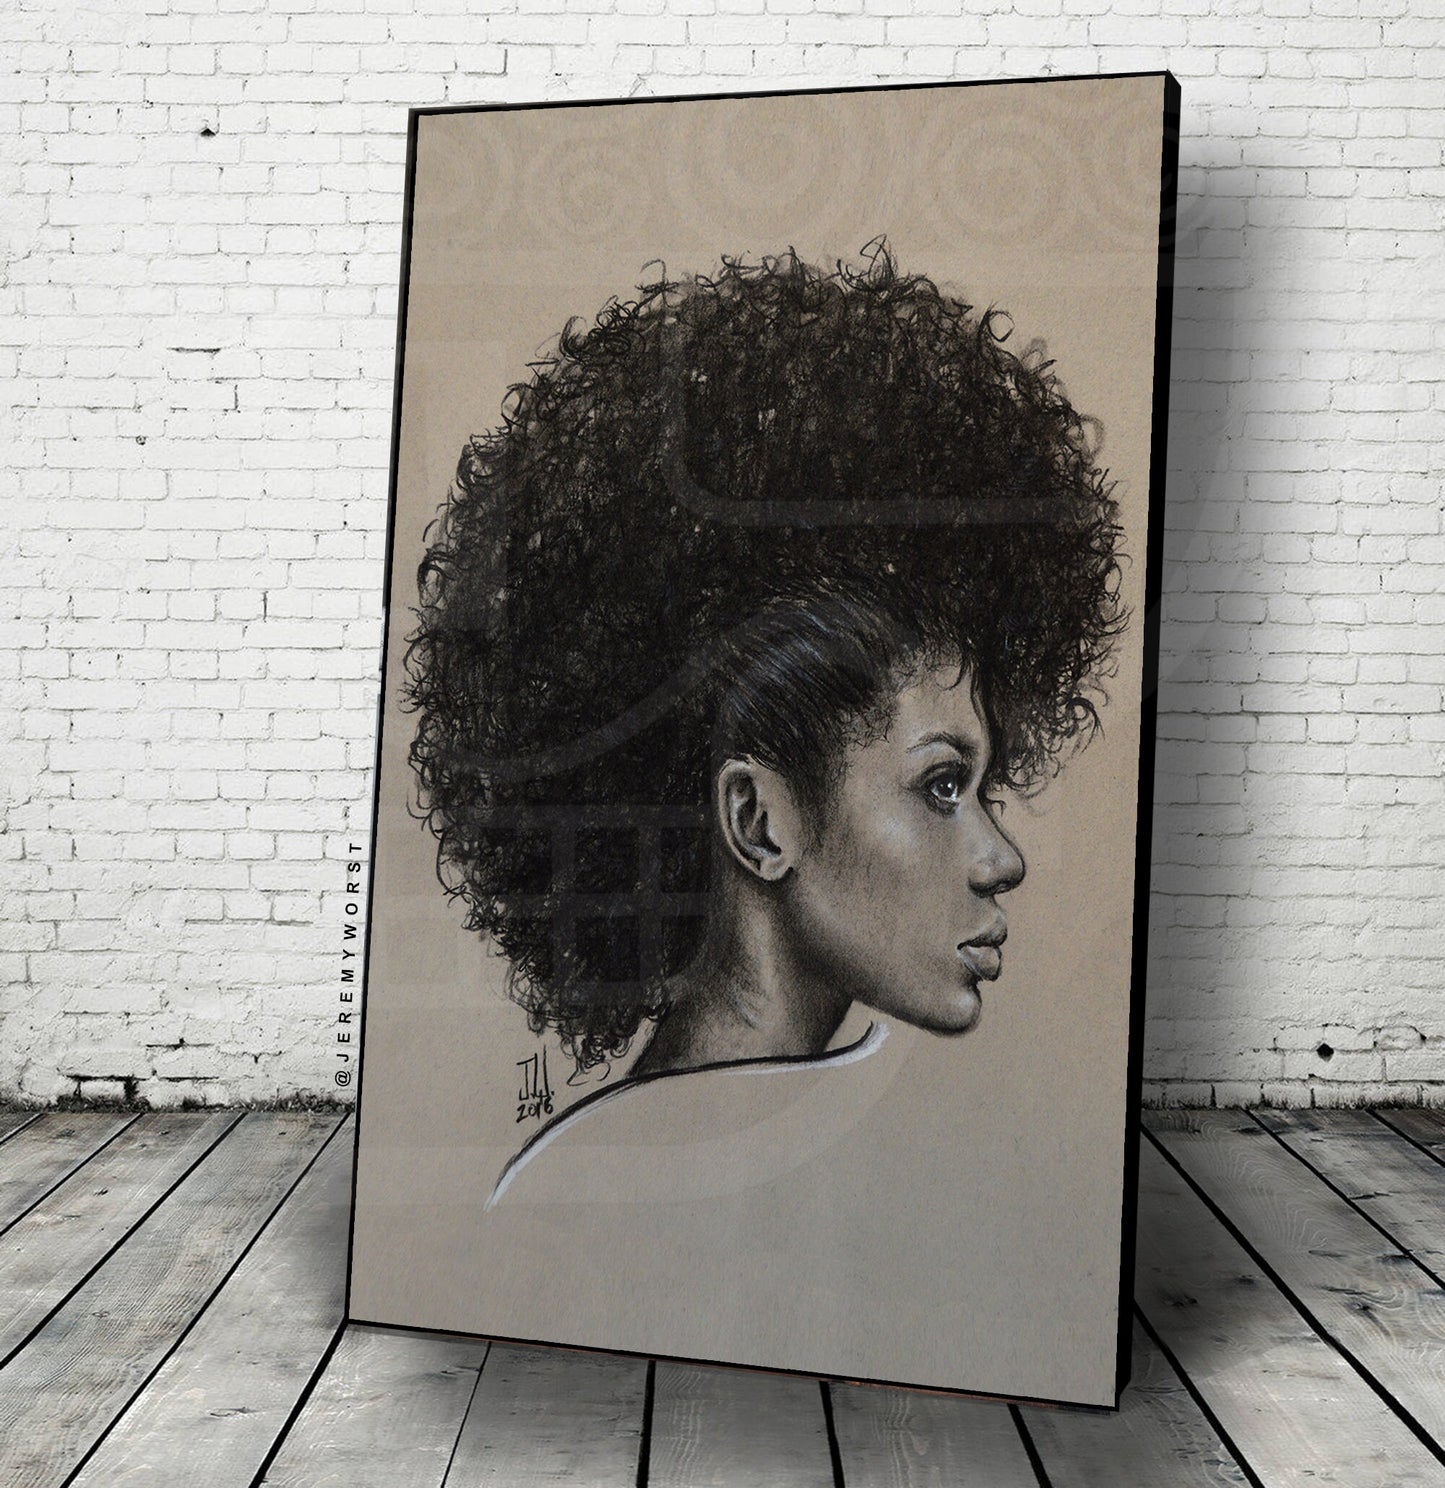 JEREMY WORST "Frohawk afro urban black girl power strong motivational relaxing look profile artwork wall decor wall art